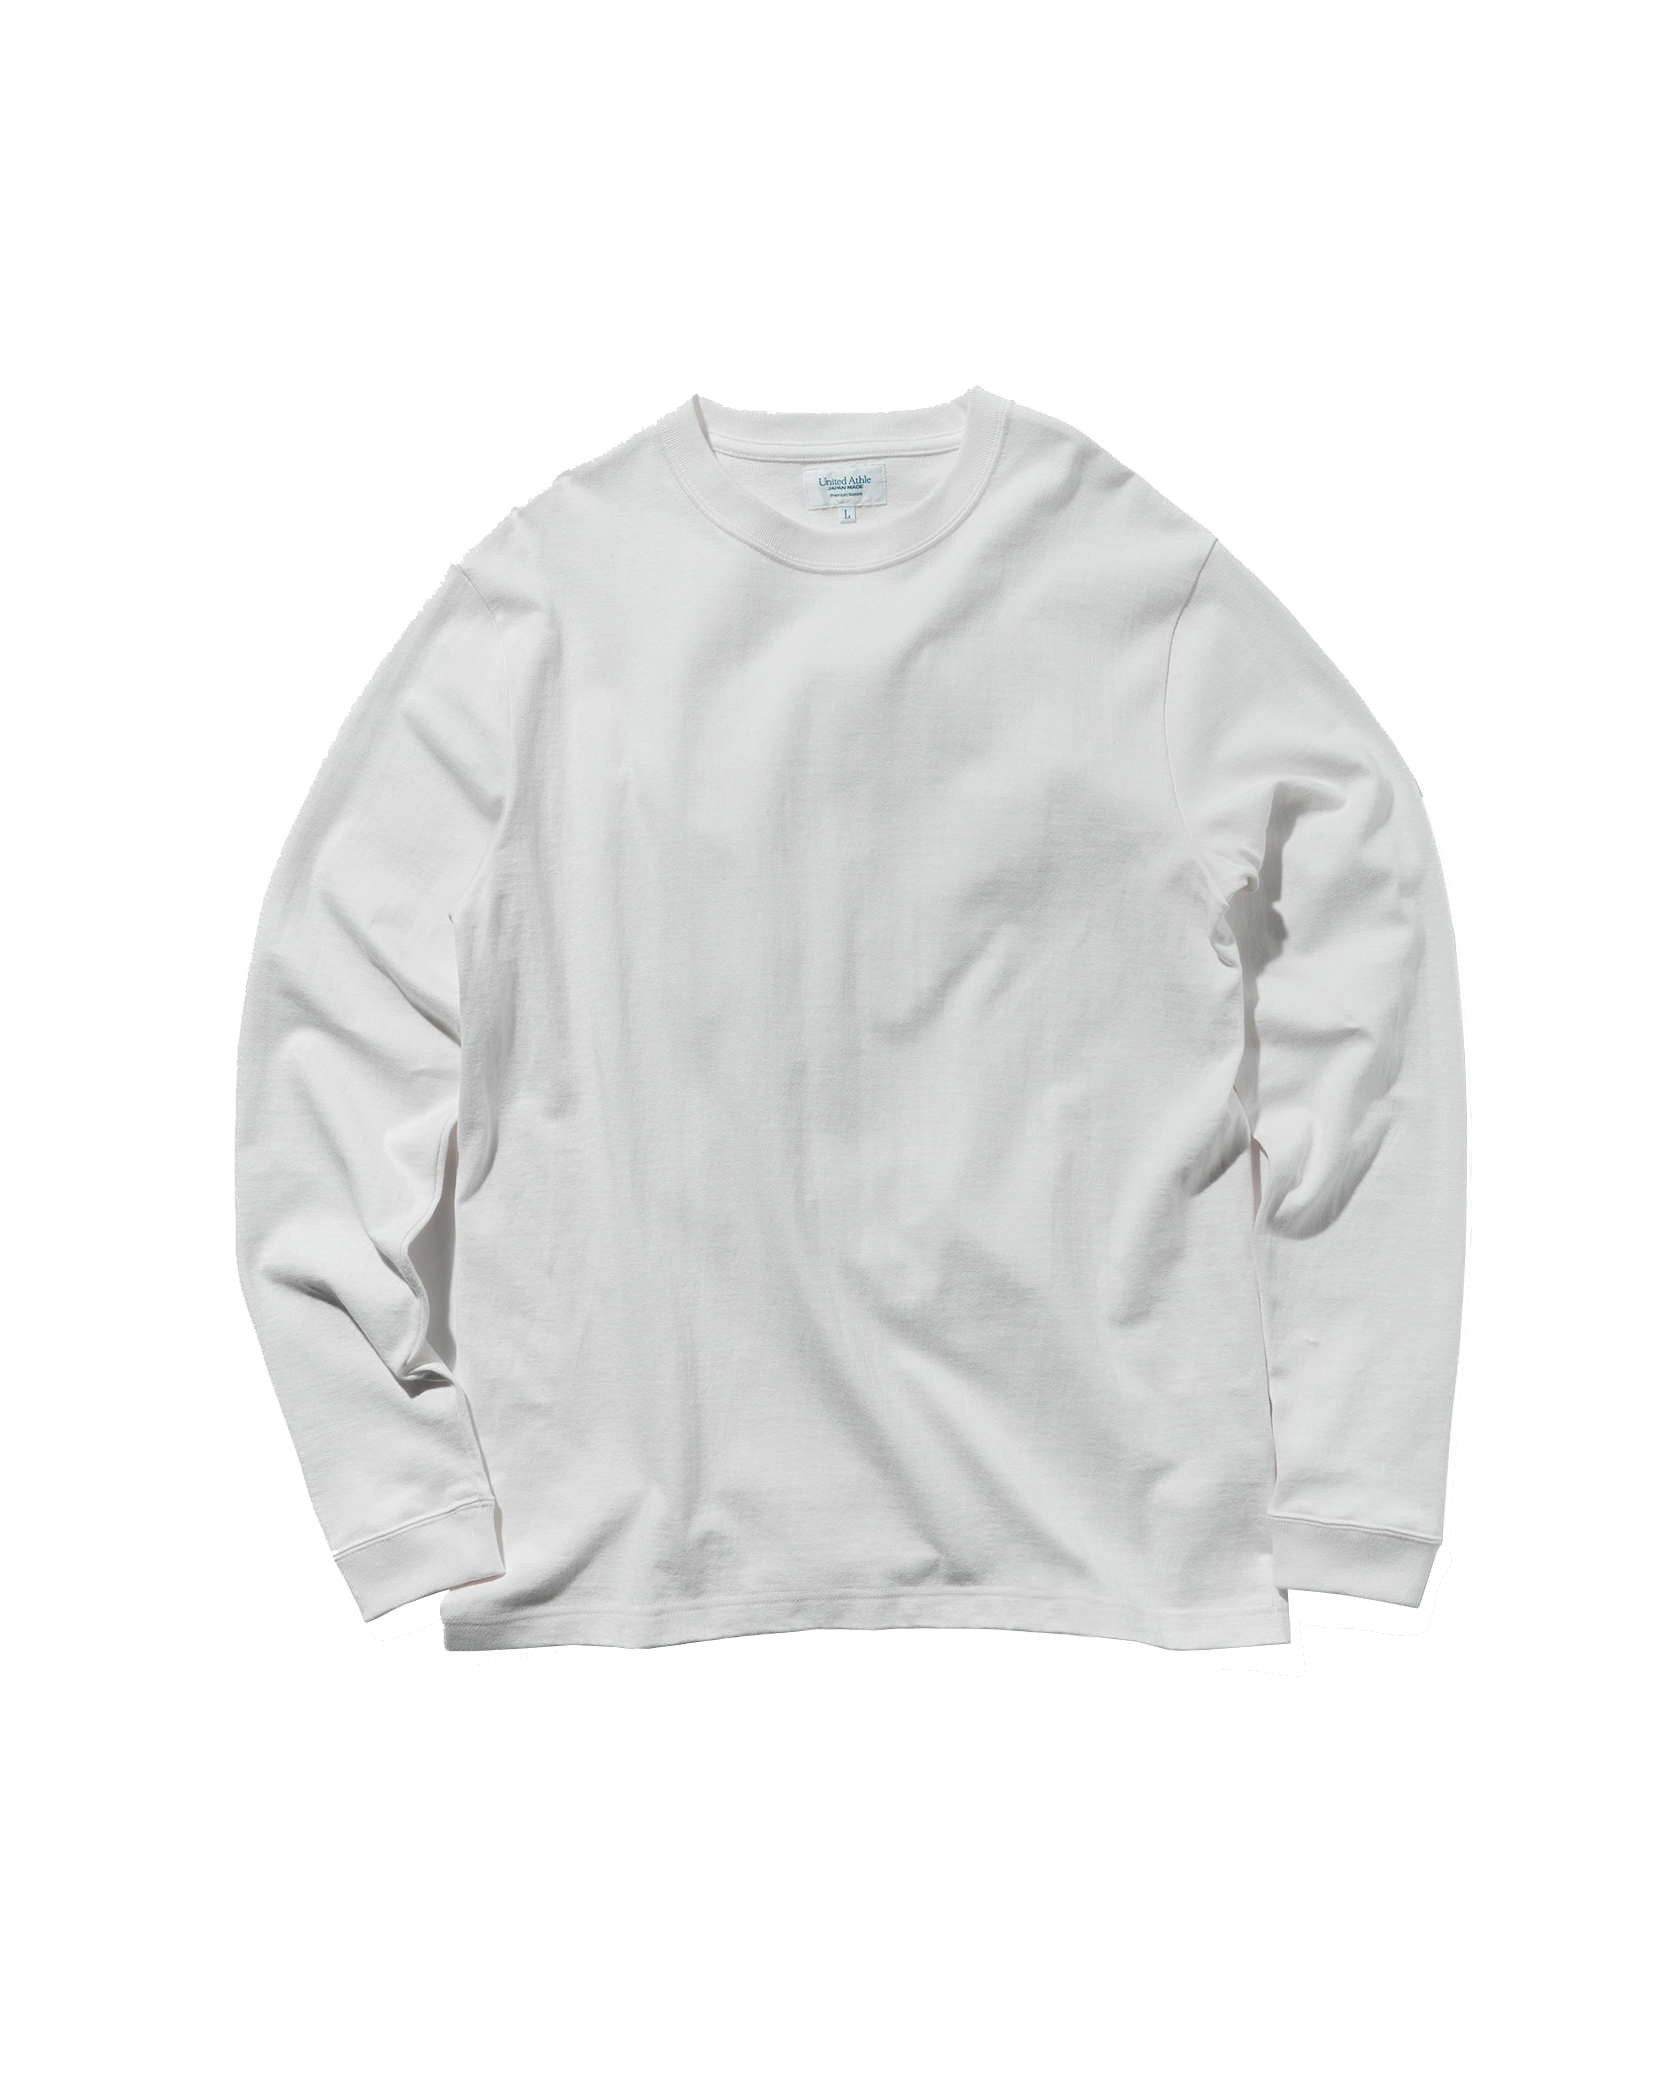 80004 - Japan Made - Standard Fit Long Sleeve T-shirt - White x 1